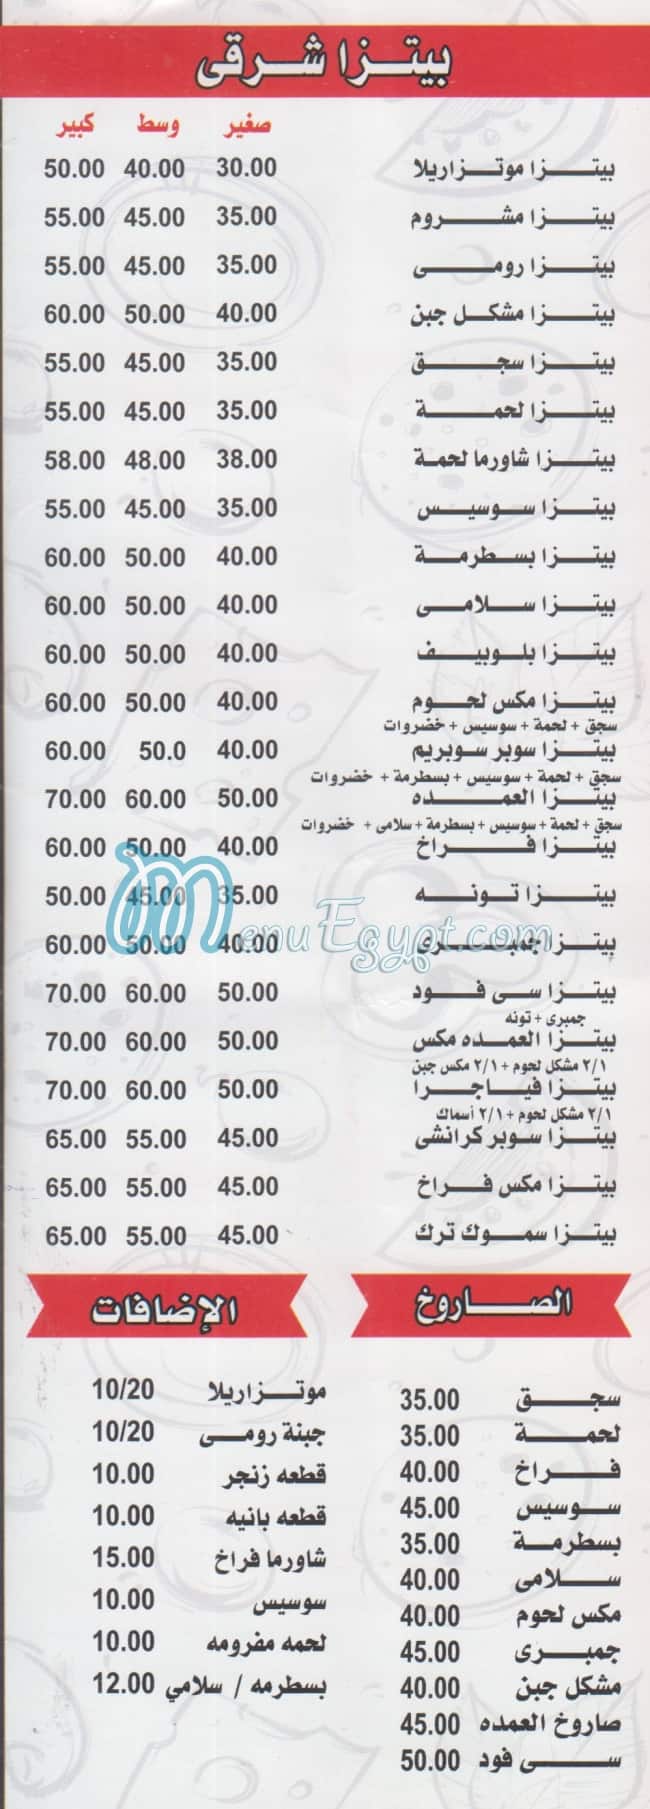 Koshary El Omda menu prices